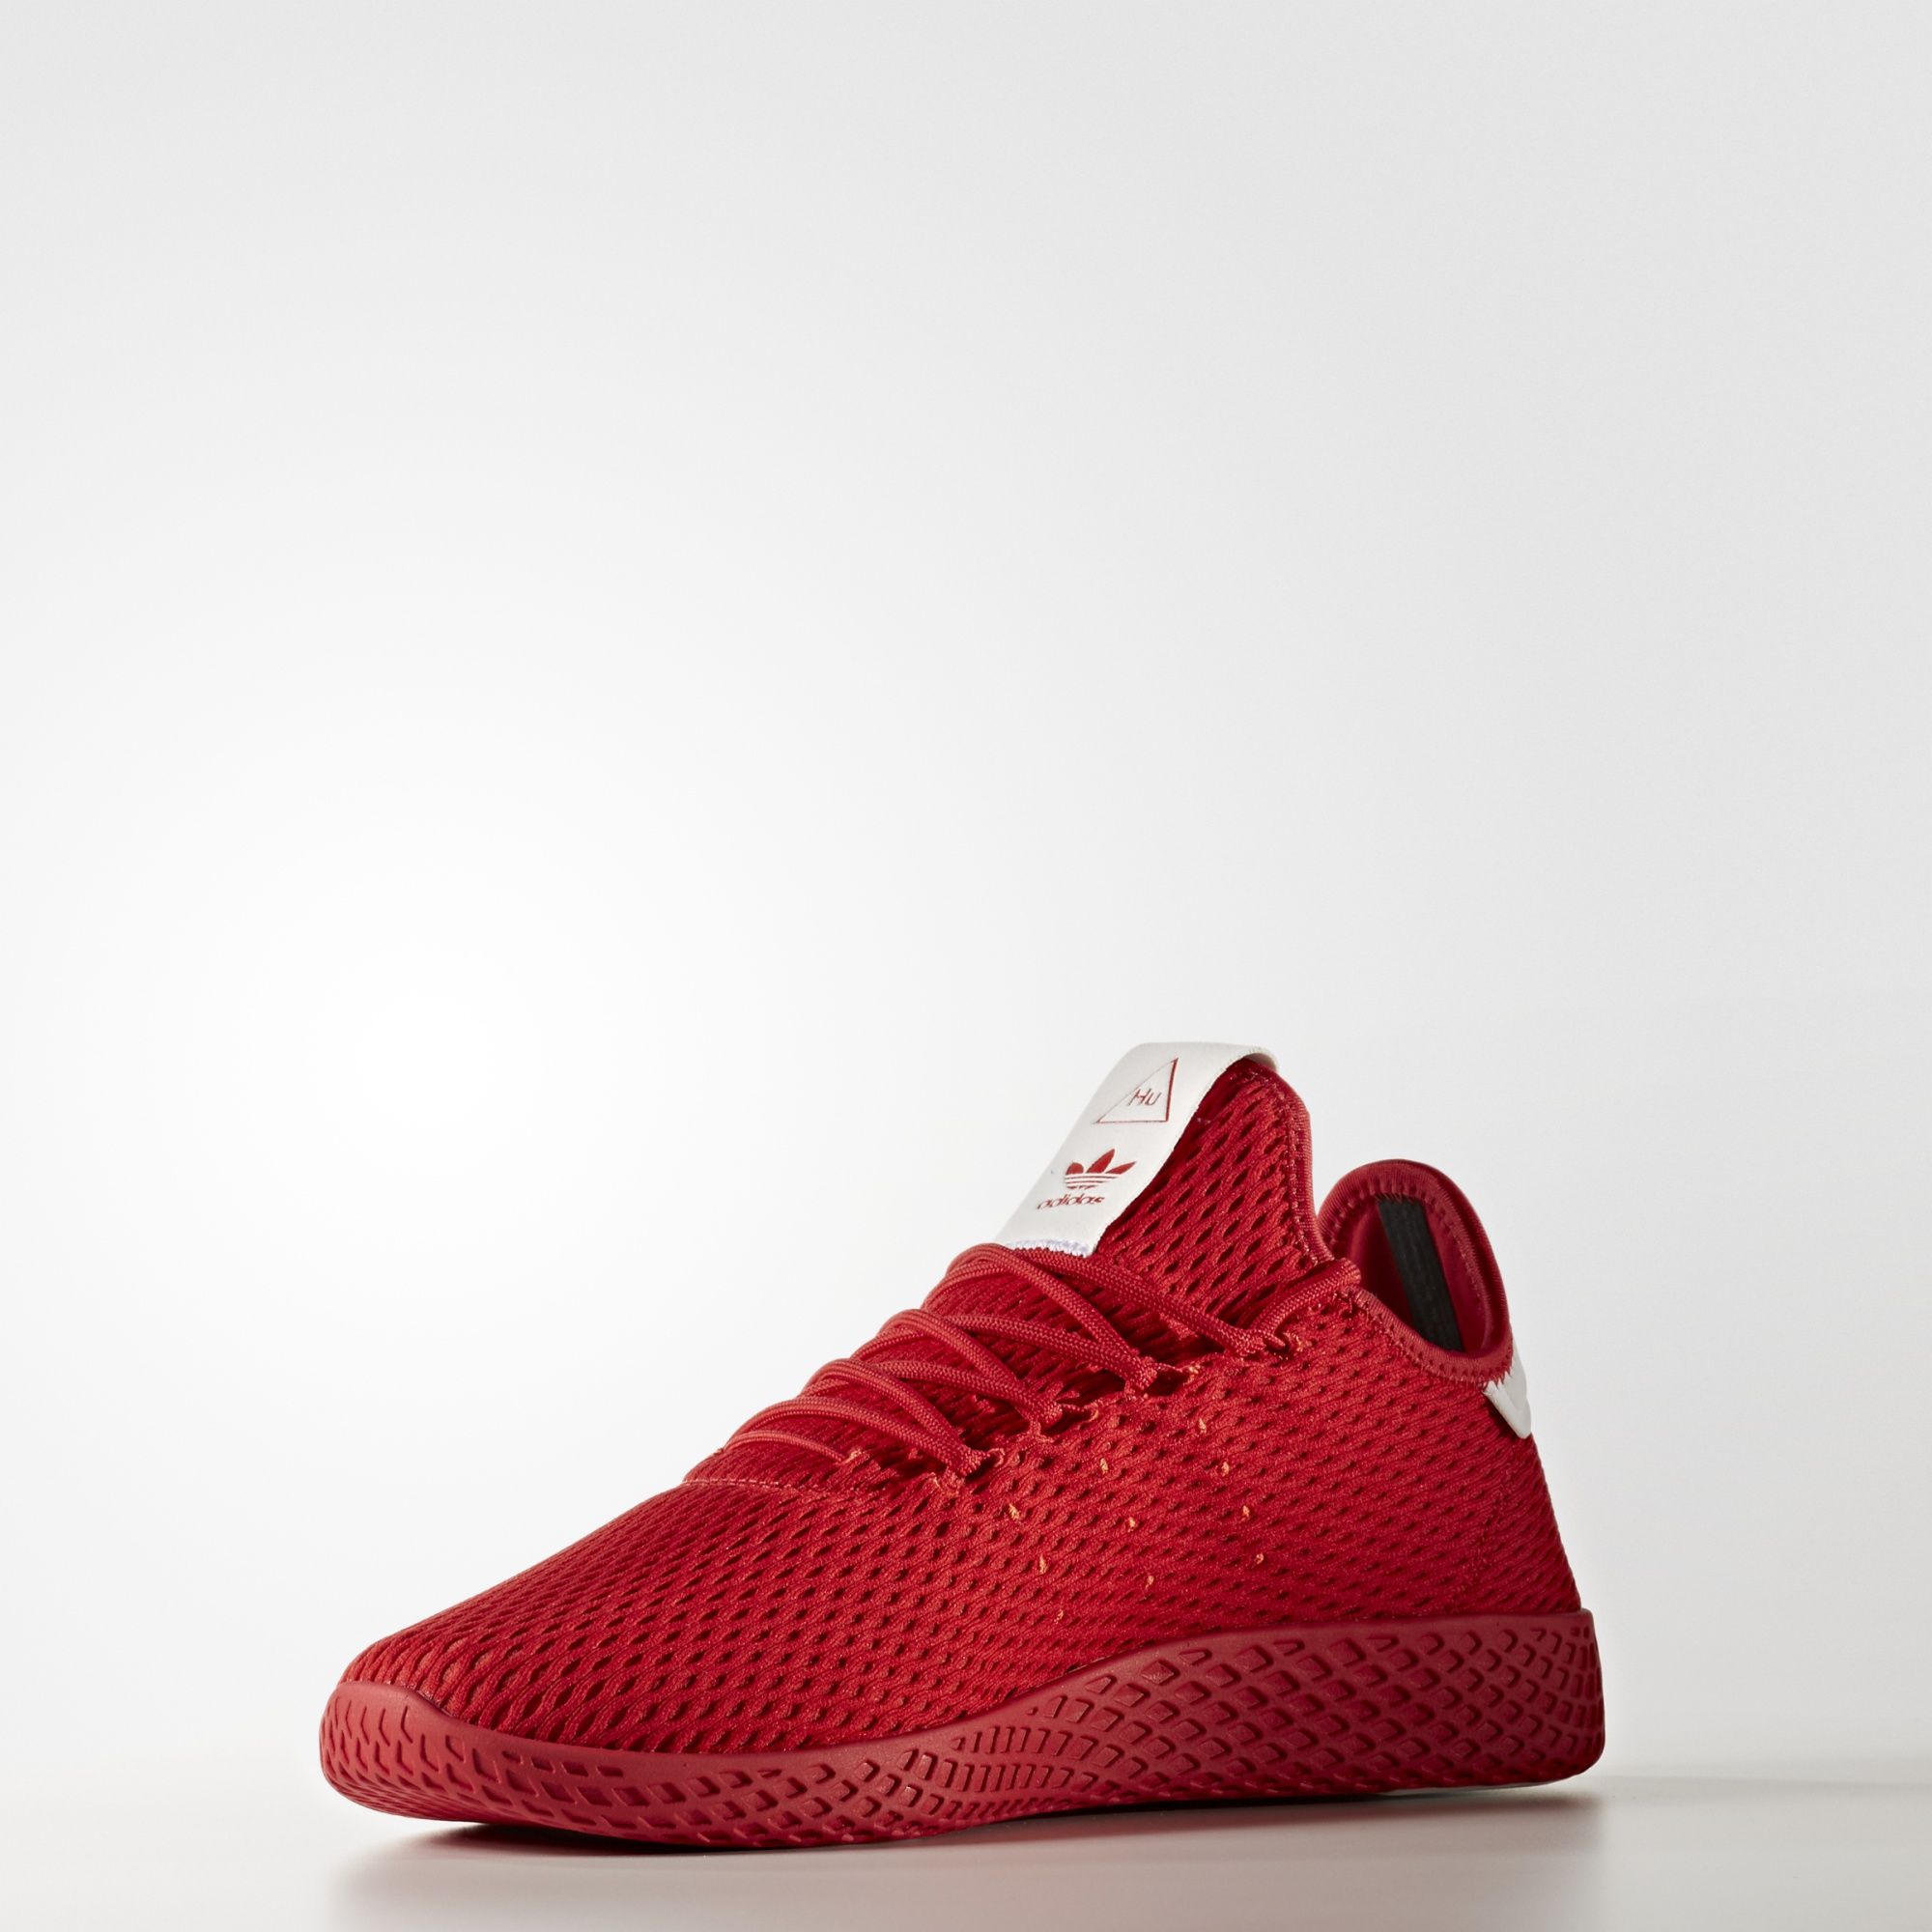 adidas-pharrell-williams-tennis-hu-scarlet-red-solid-pack-3